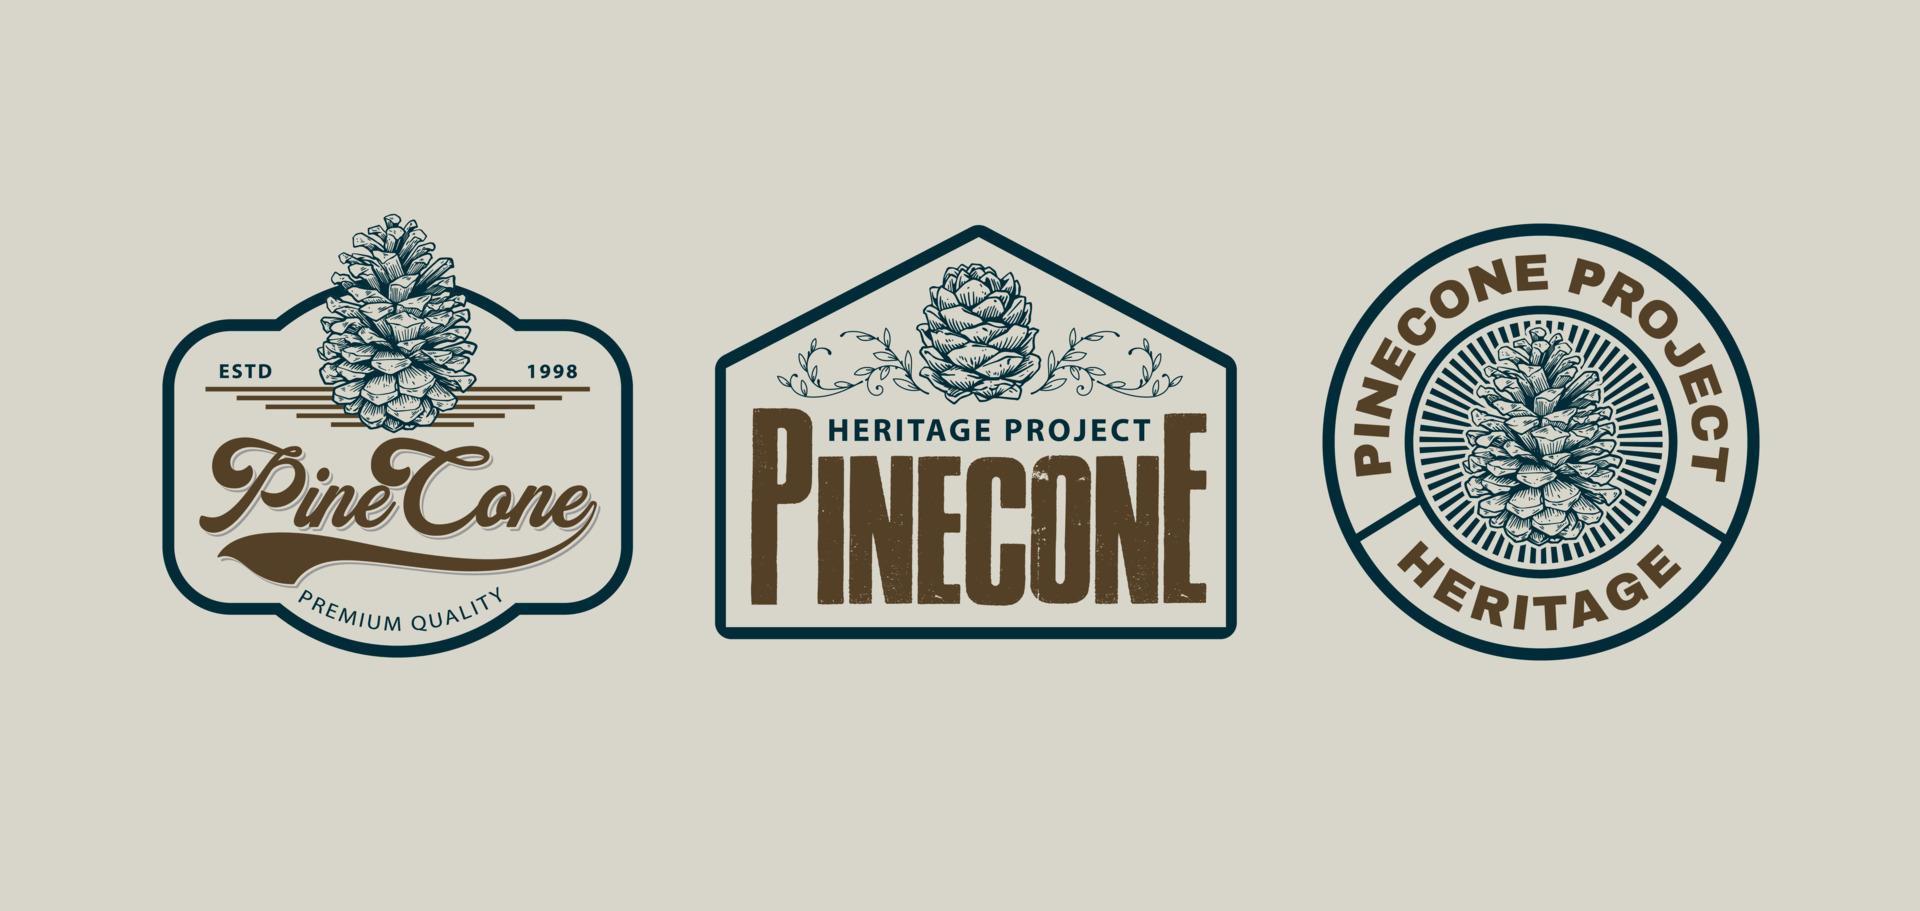 pine cone logo, badge and emblem design vector